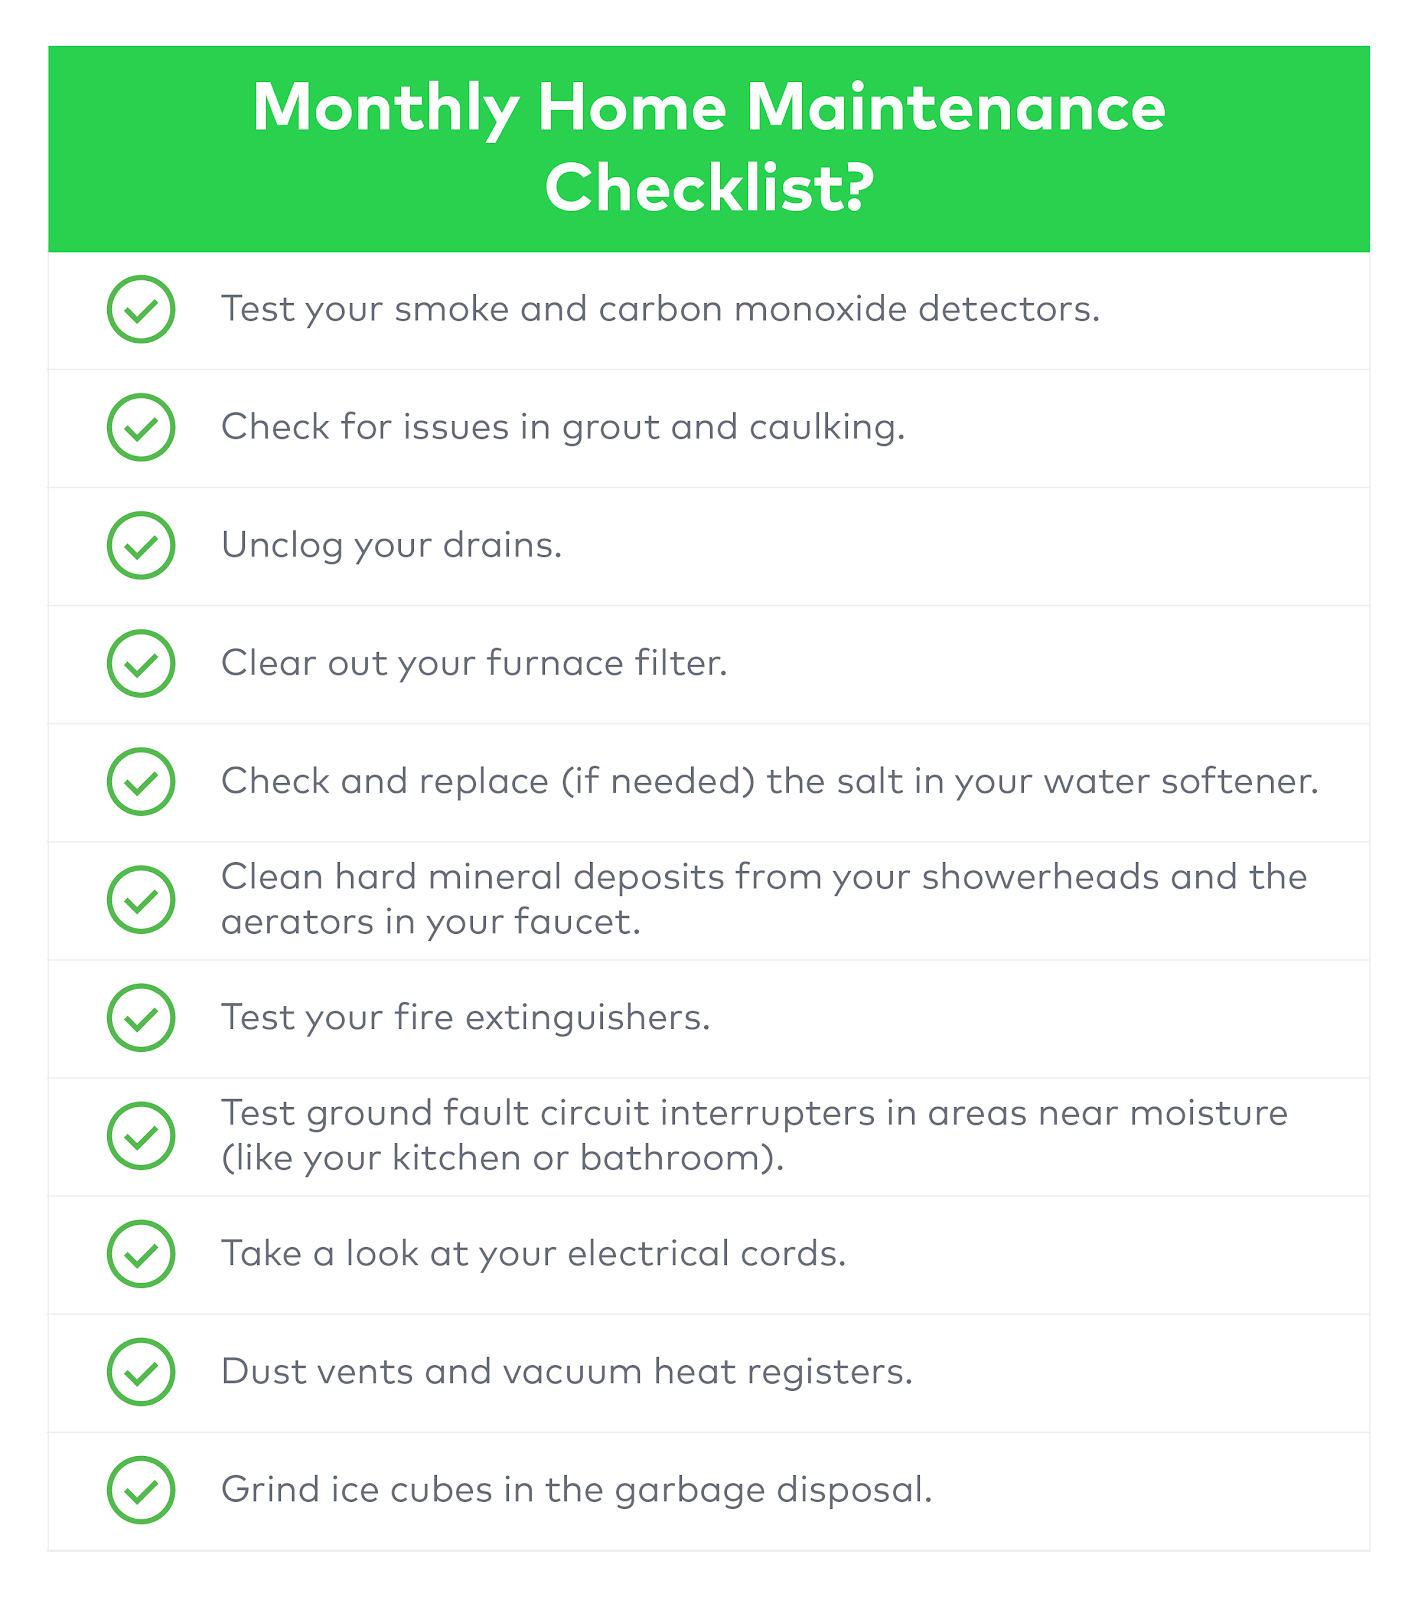 Monthly Home Maintenance Checklist